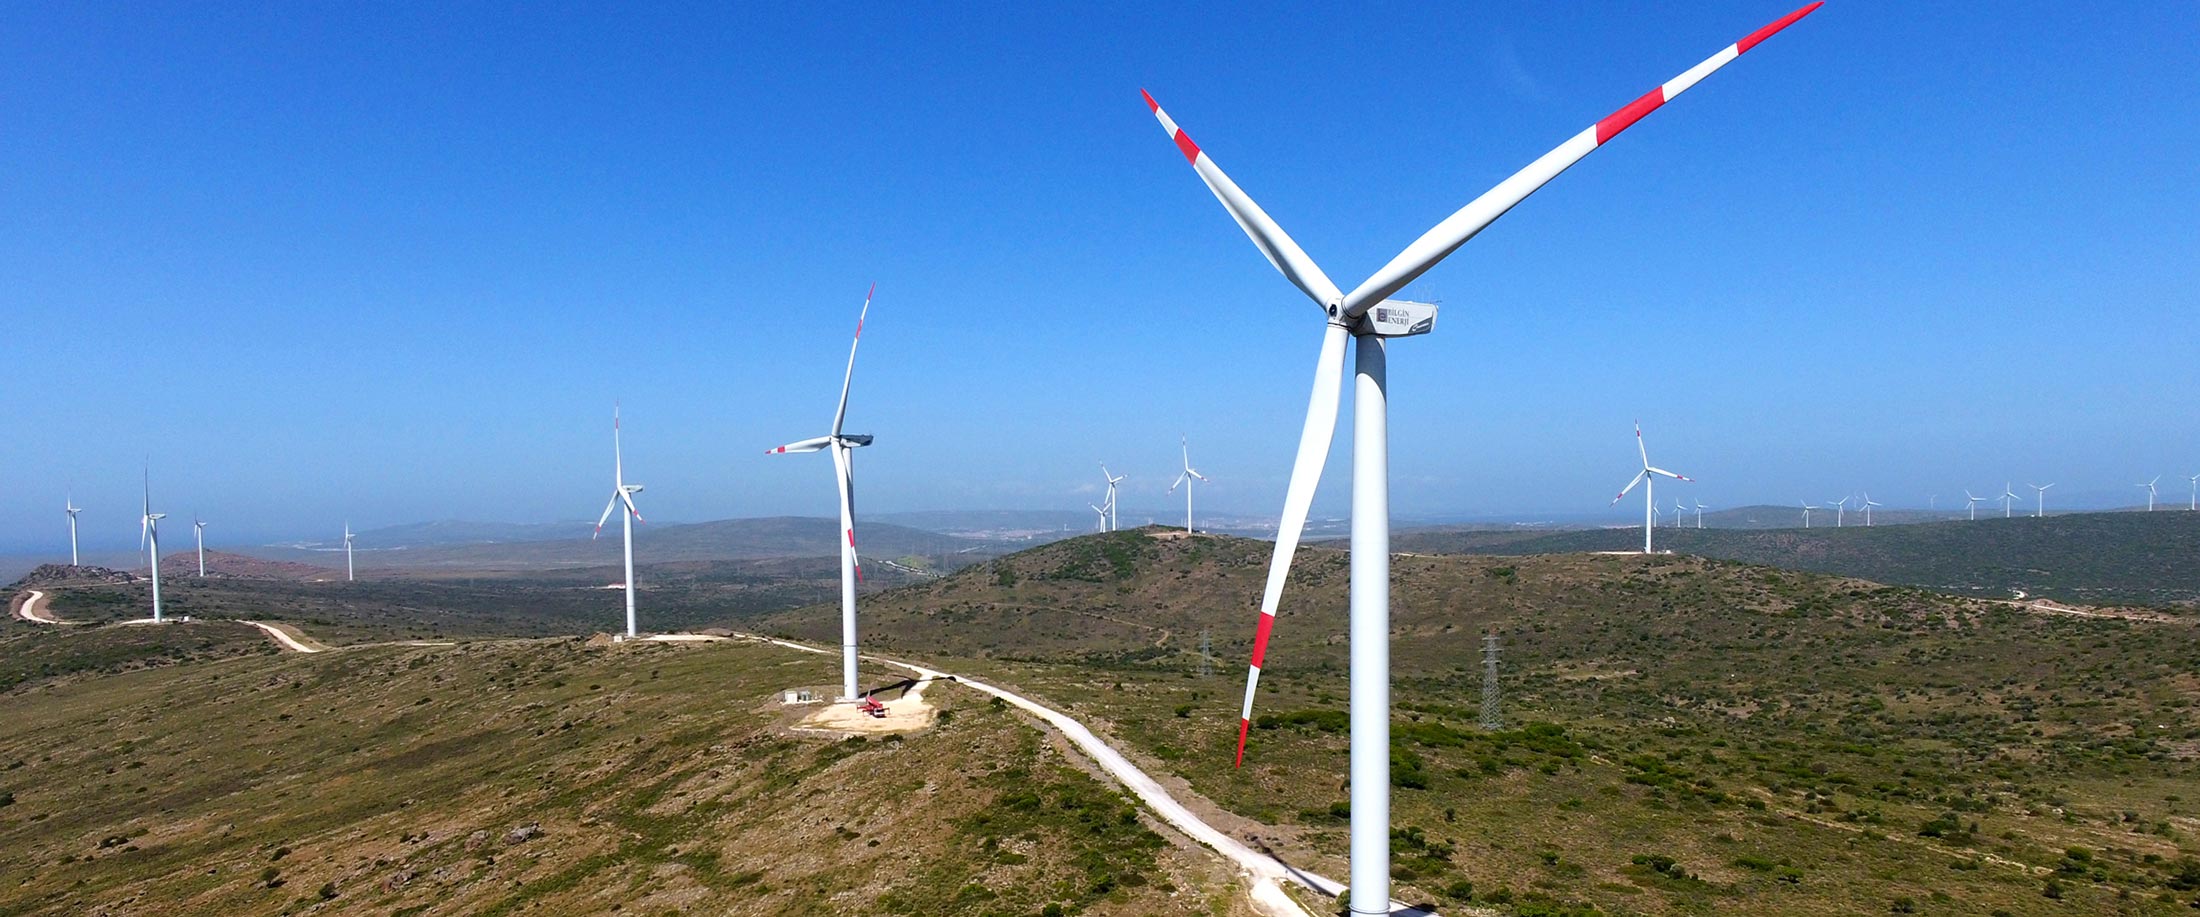 Aliaga wind farm renewable energy carbon offset project in Turkey